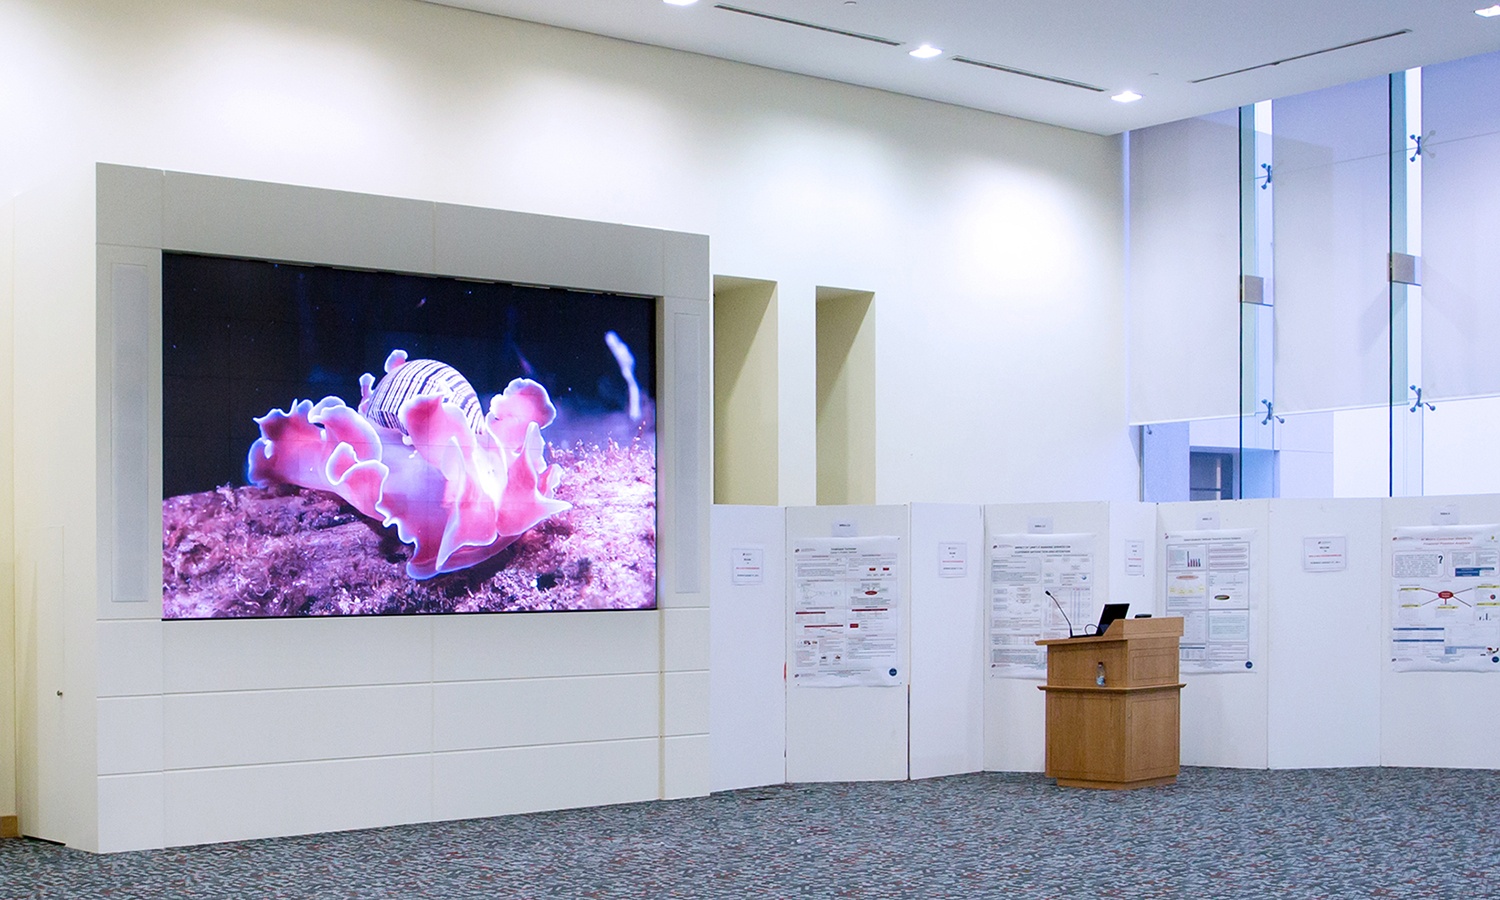 prysm-video-wall-at-qatar-university.jpg